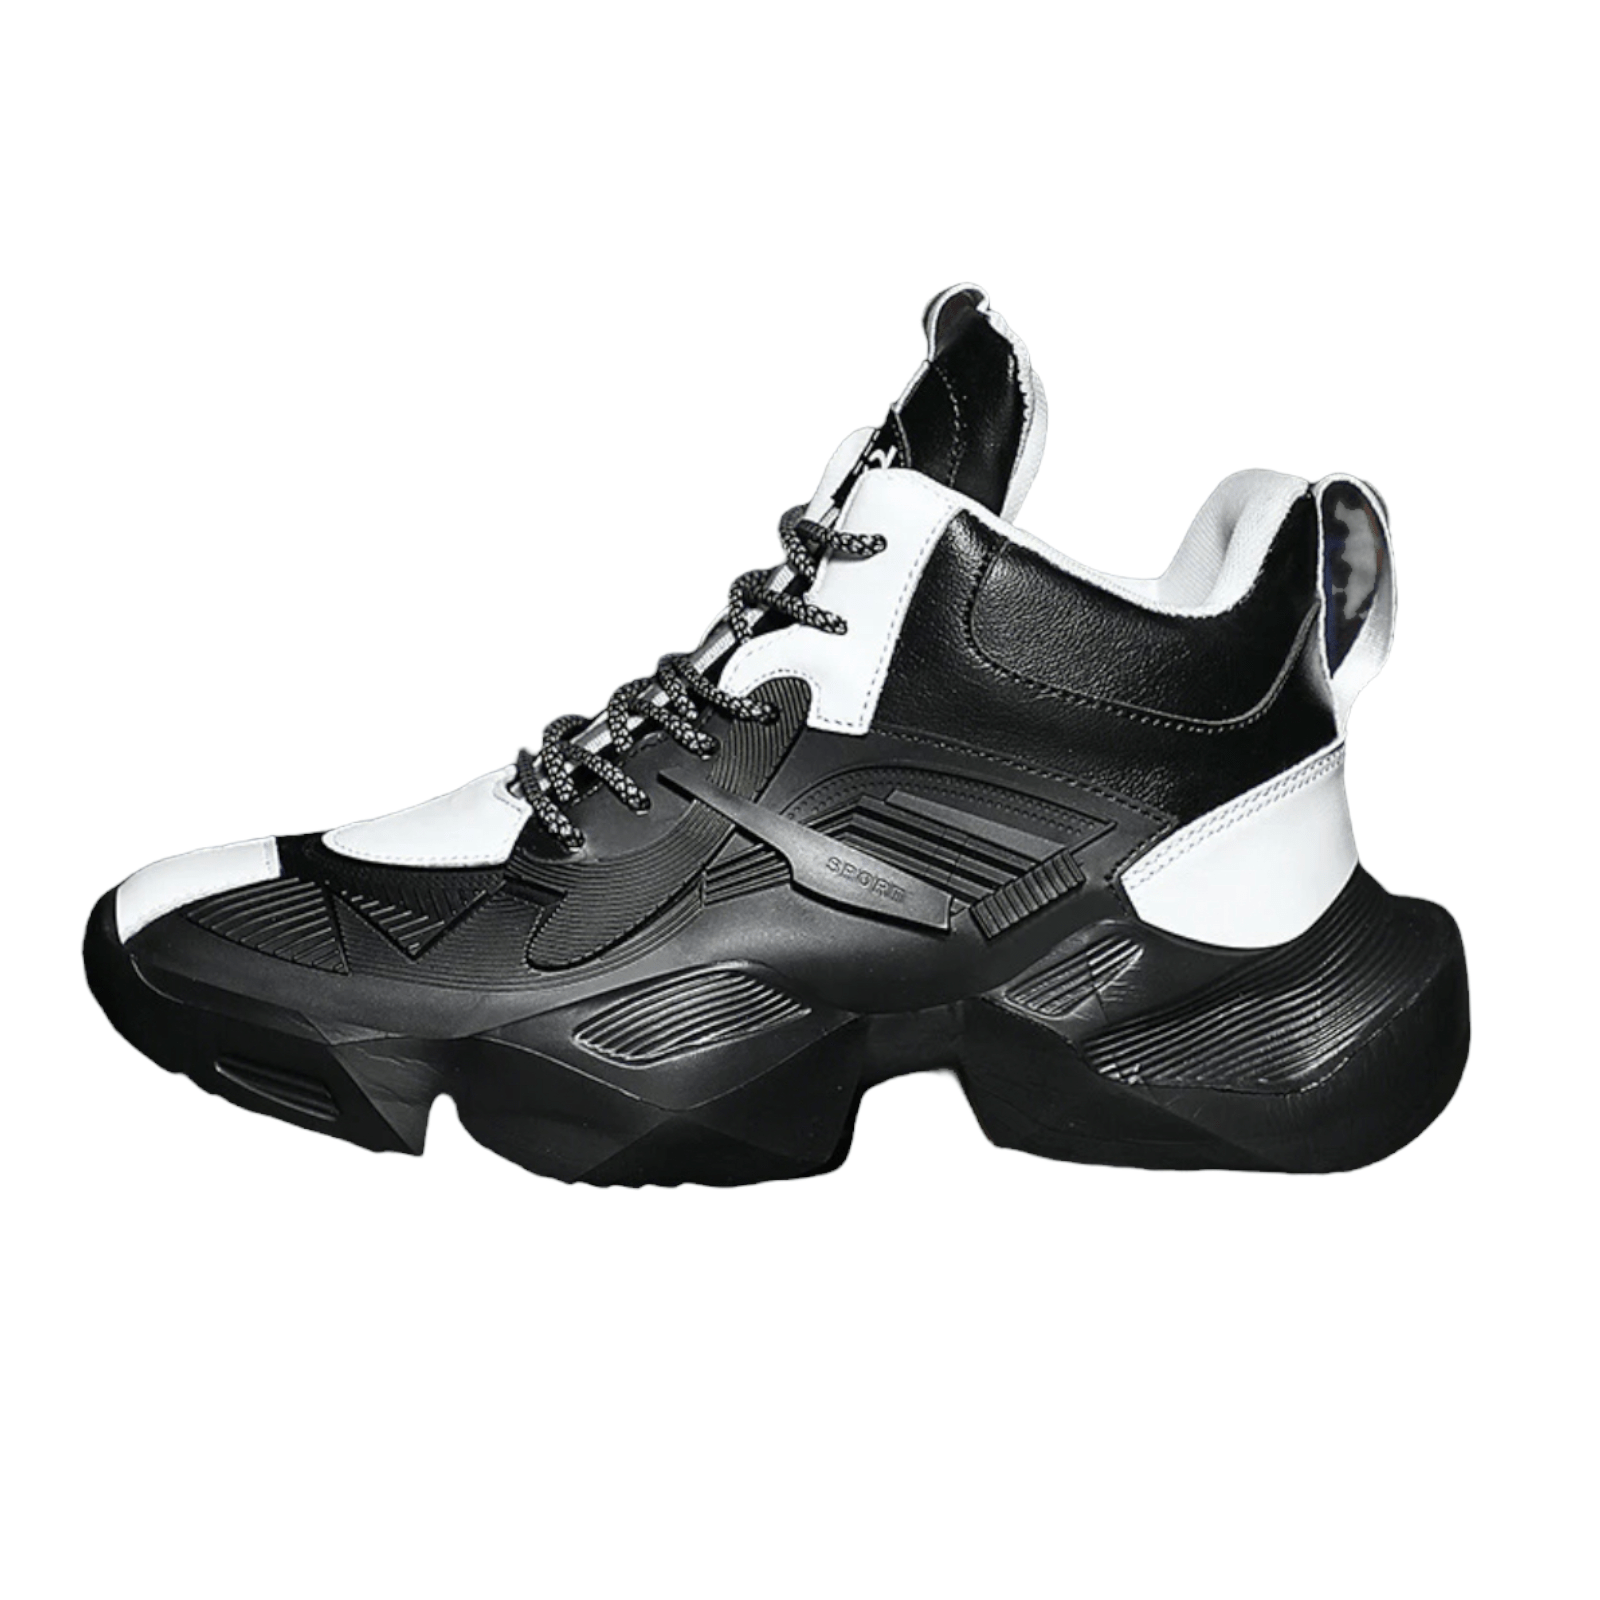 black and white shoes aquiles sport flashlander left side